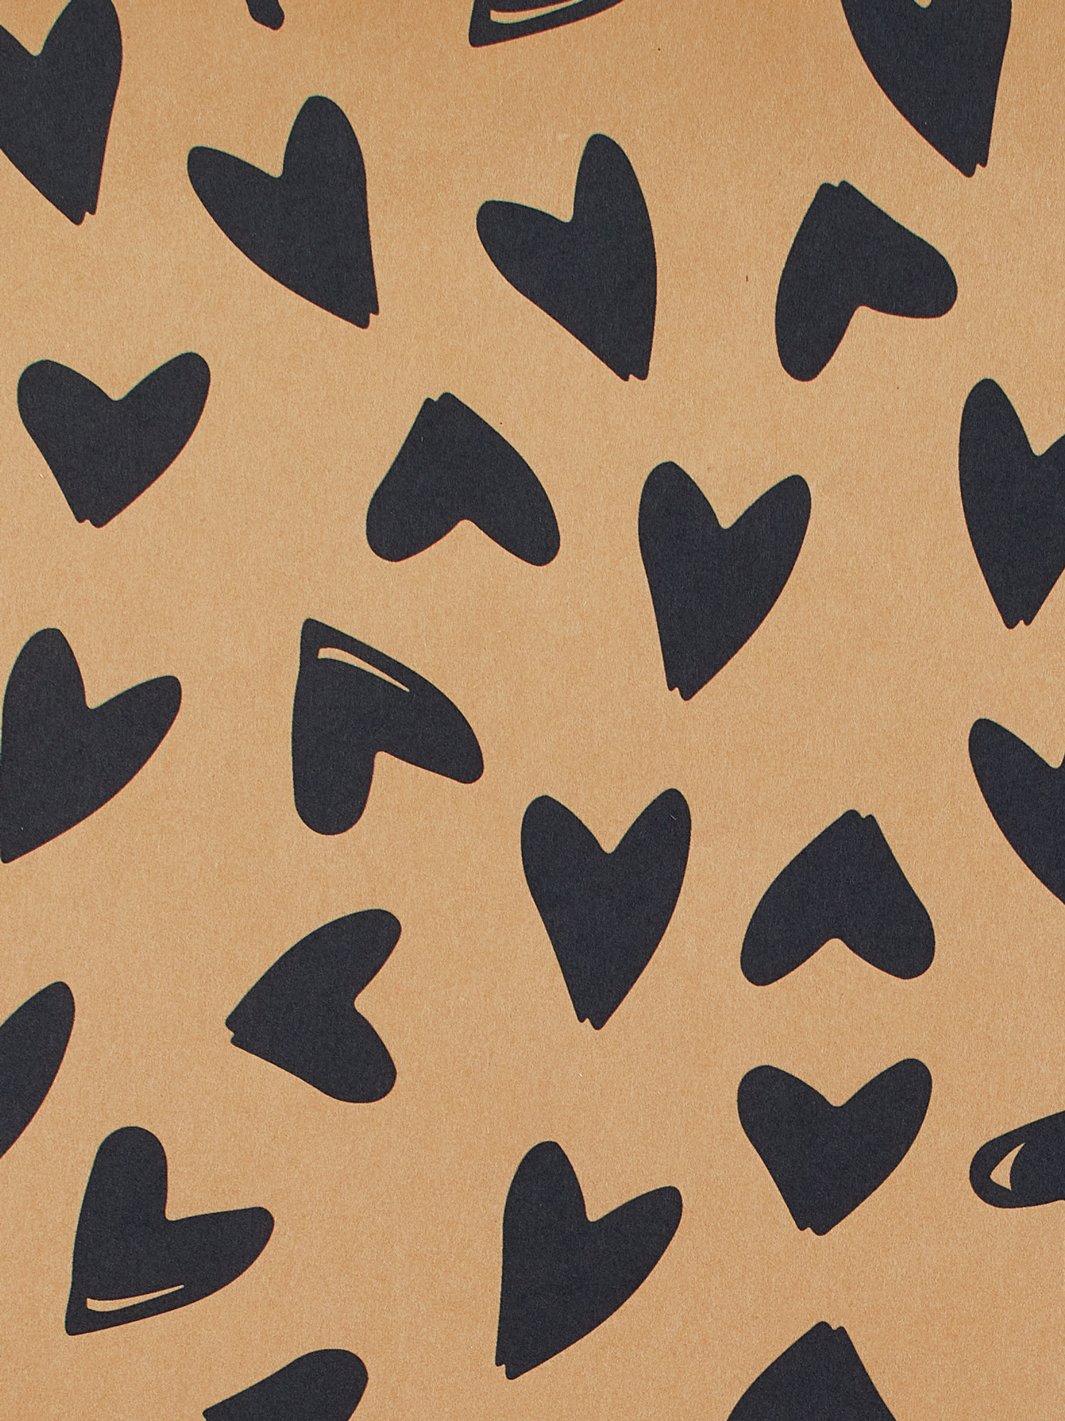 'Scattered Hearts' Kraft' Wallpaper by Sugar Paper - Navy